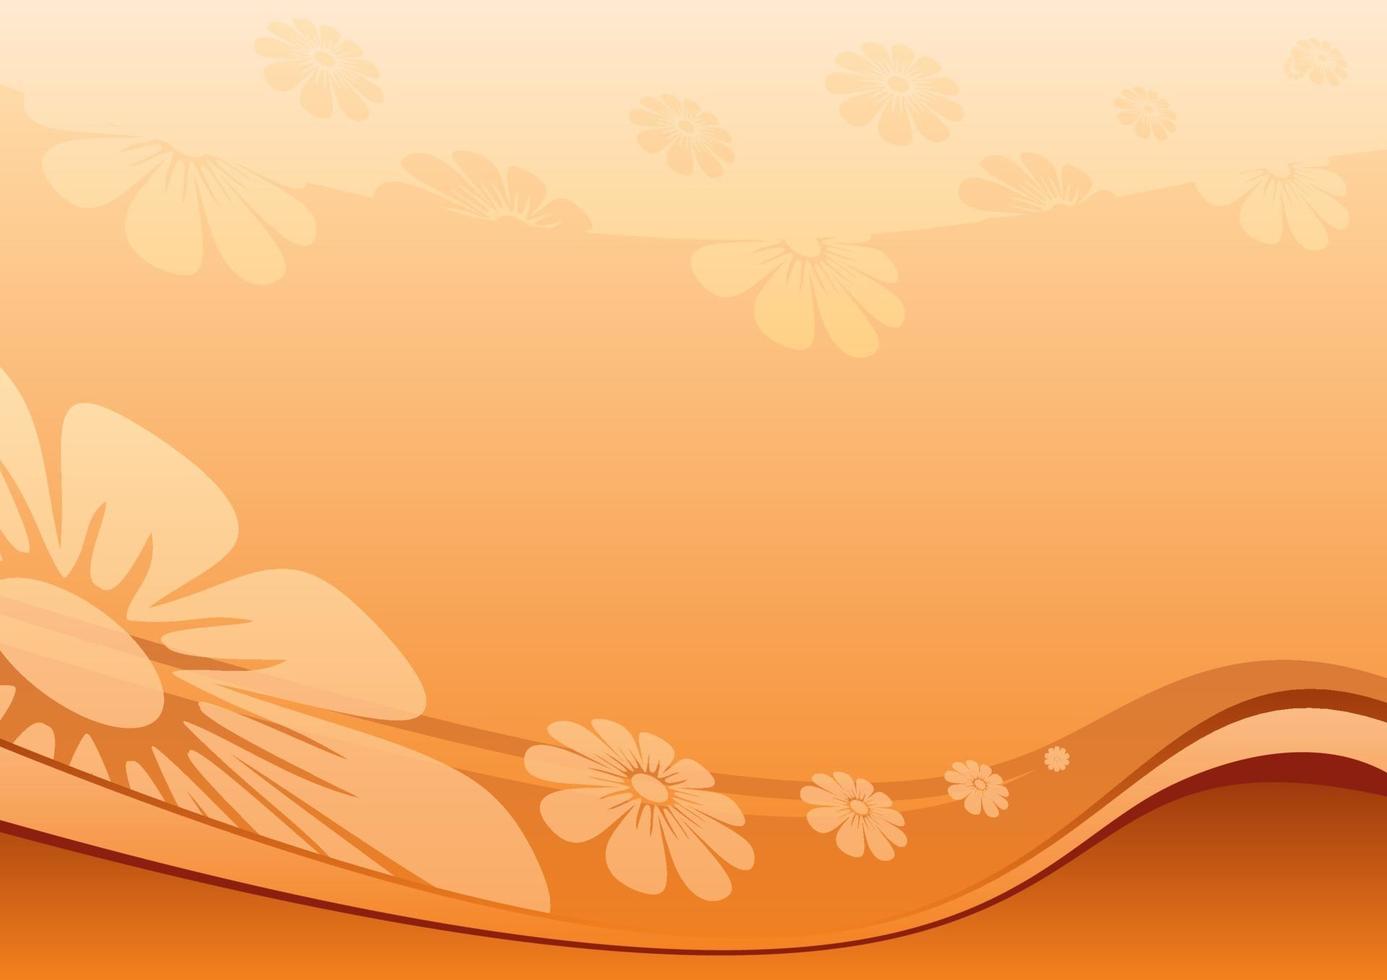 Summer flower background created in desert colors vector